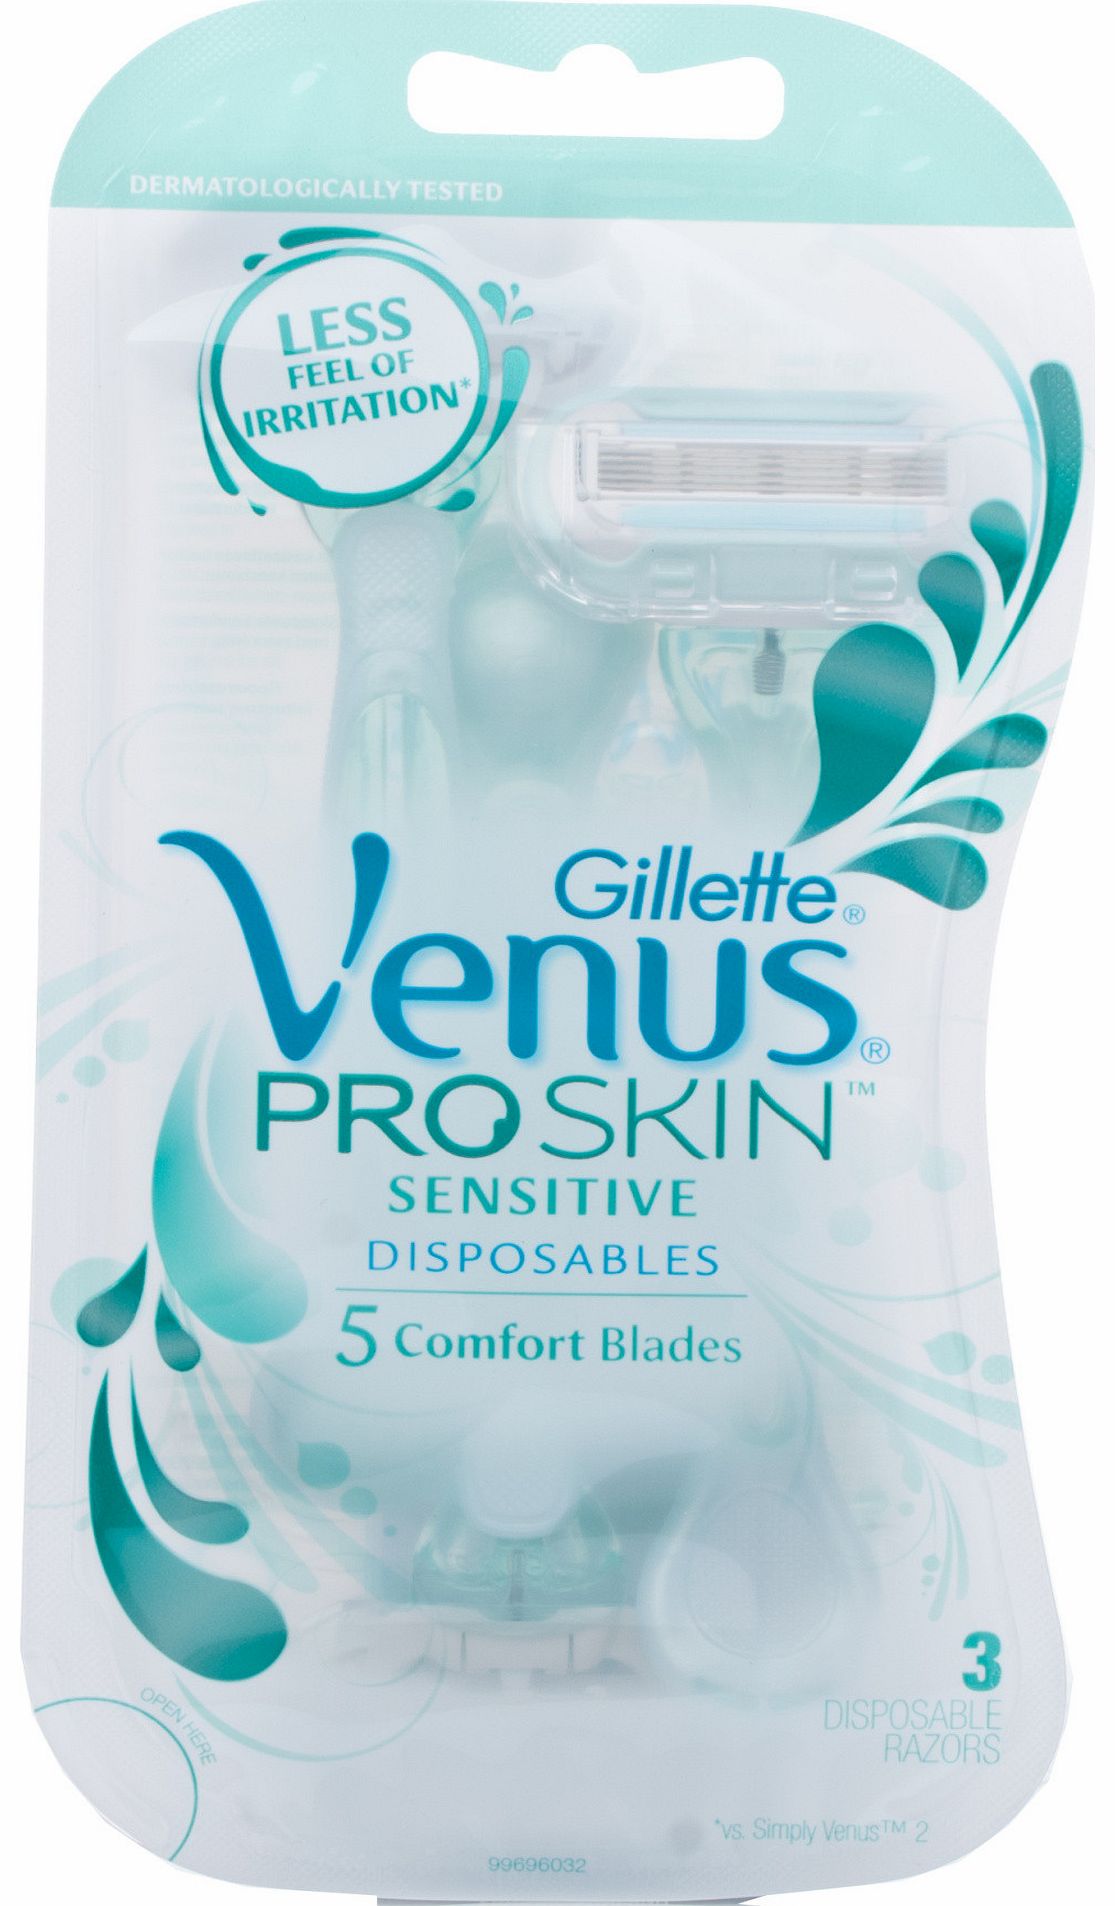 Gillette Venus Proskin Sensitive Disposable